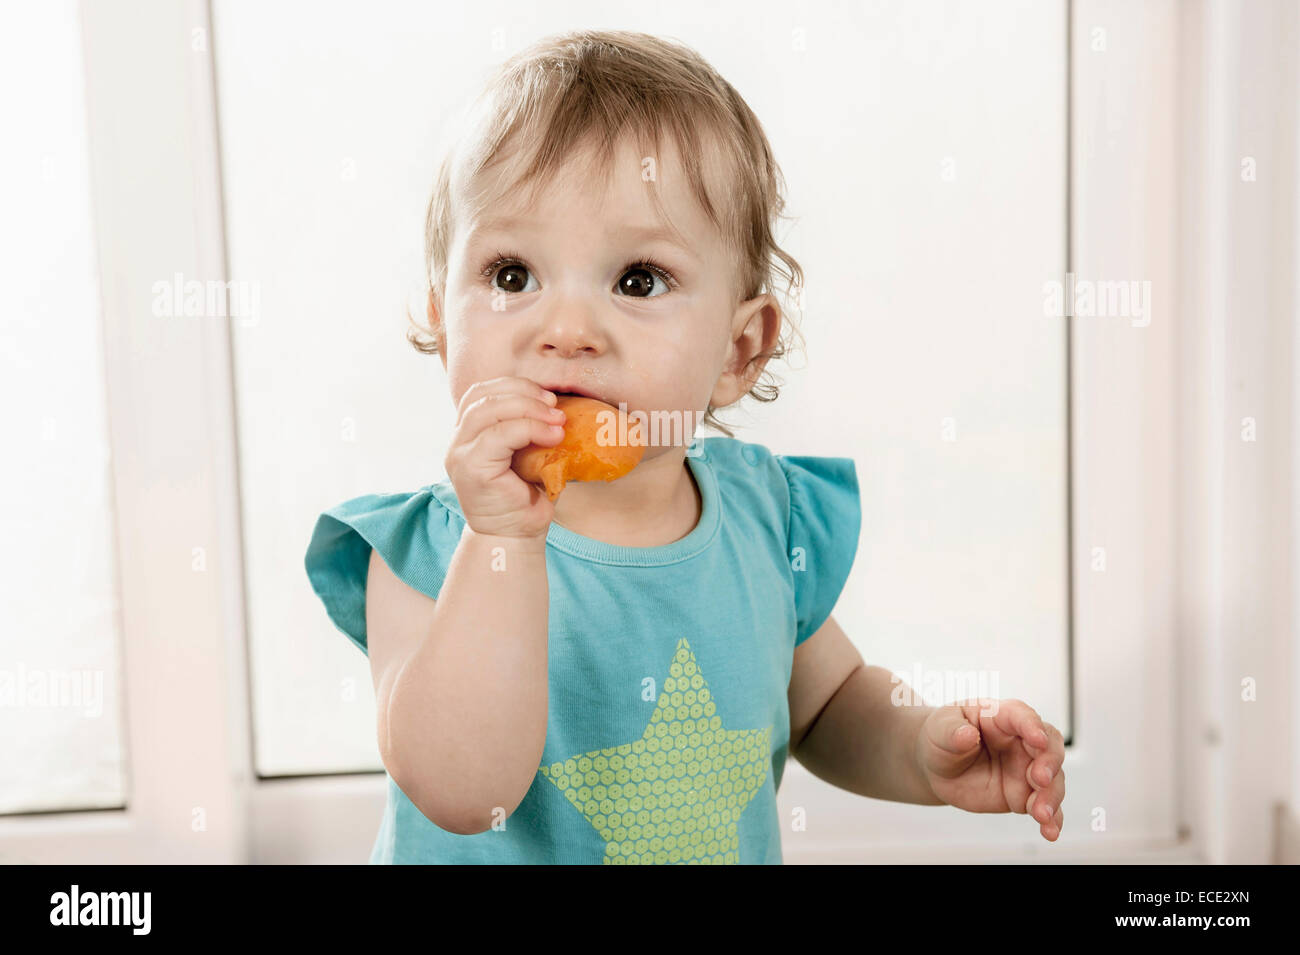 1 year old baby girl holding eating fruit Stock Photo